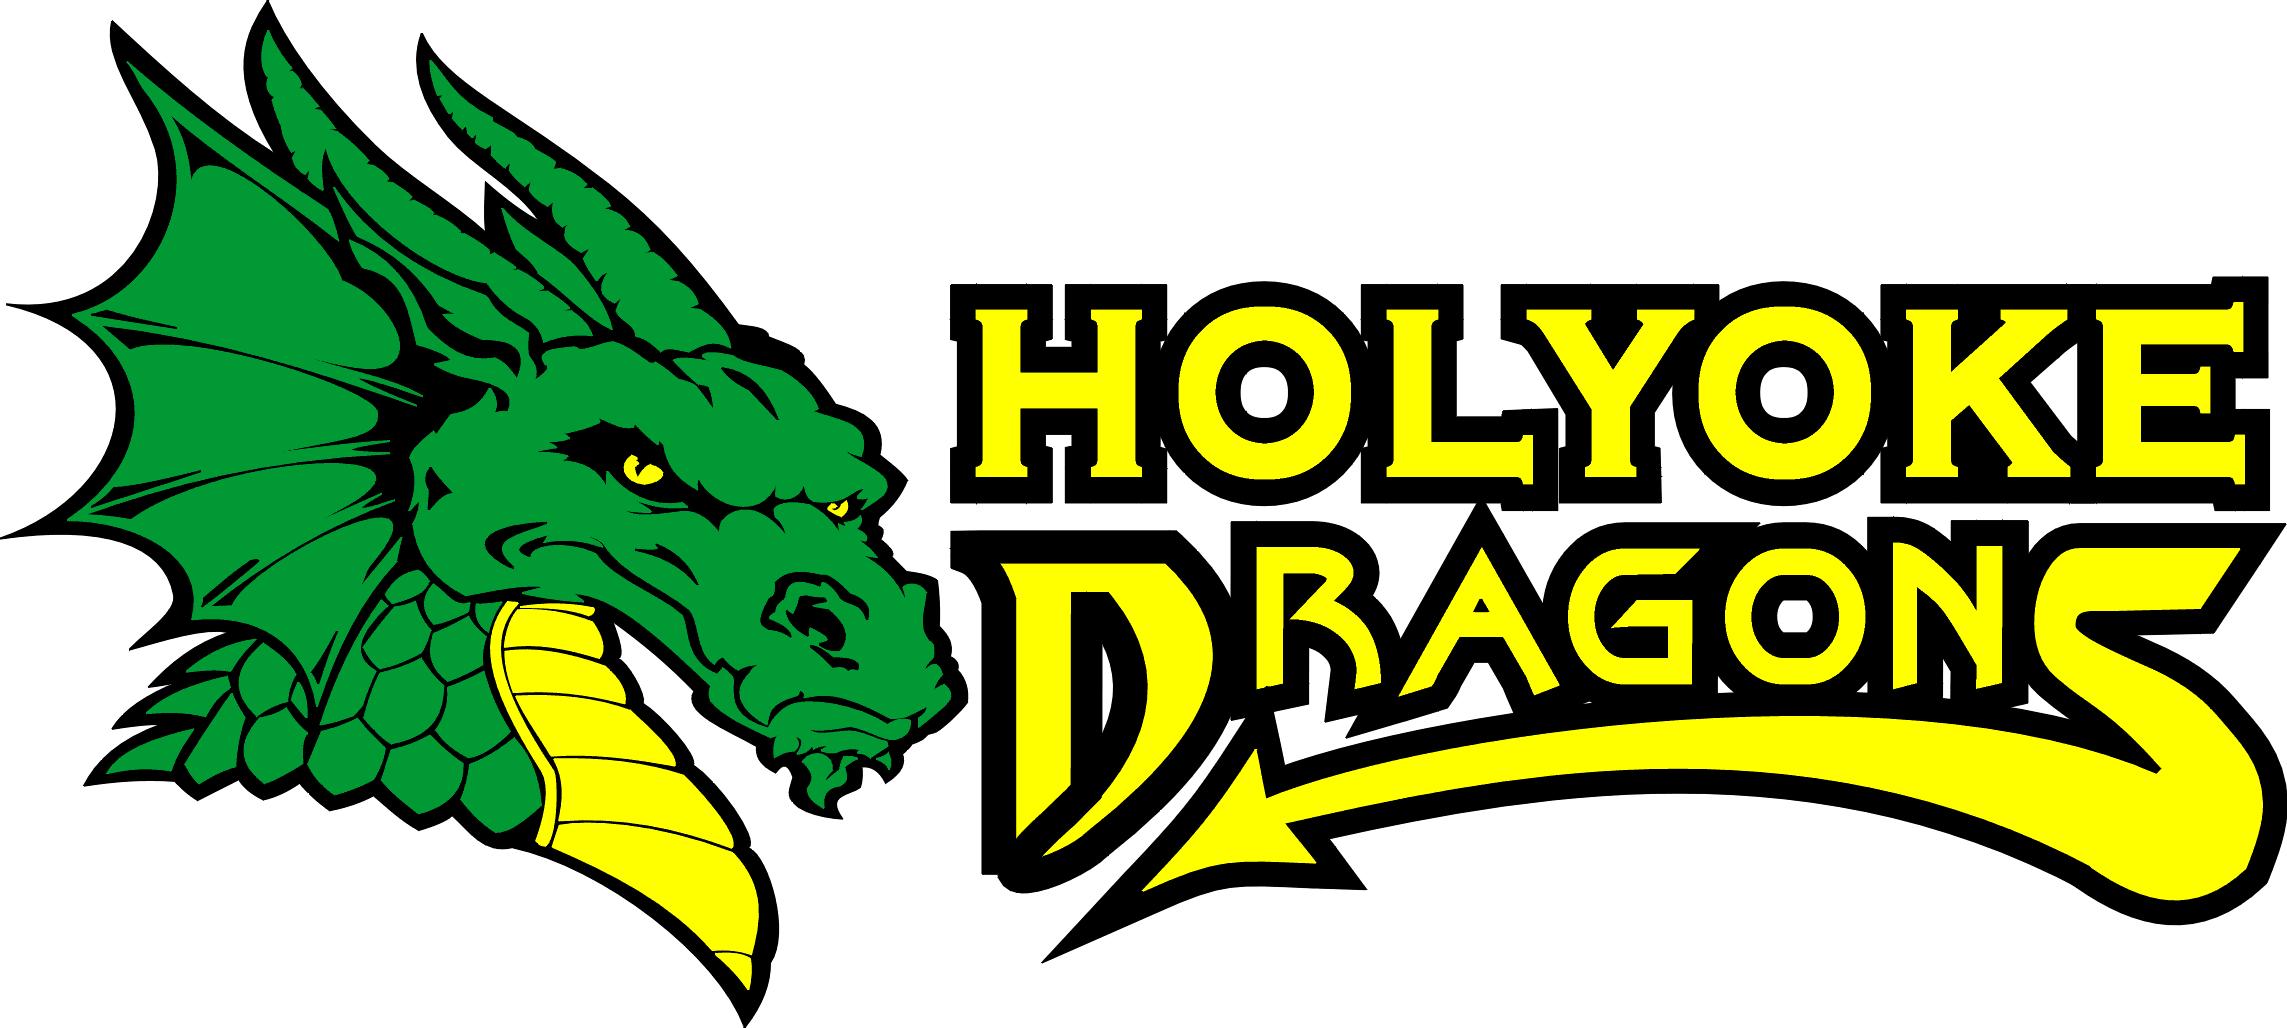 Hplyoke Dragons